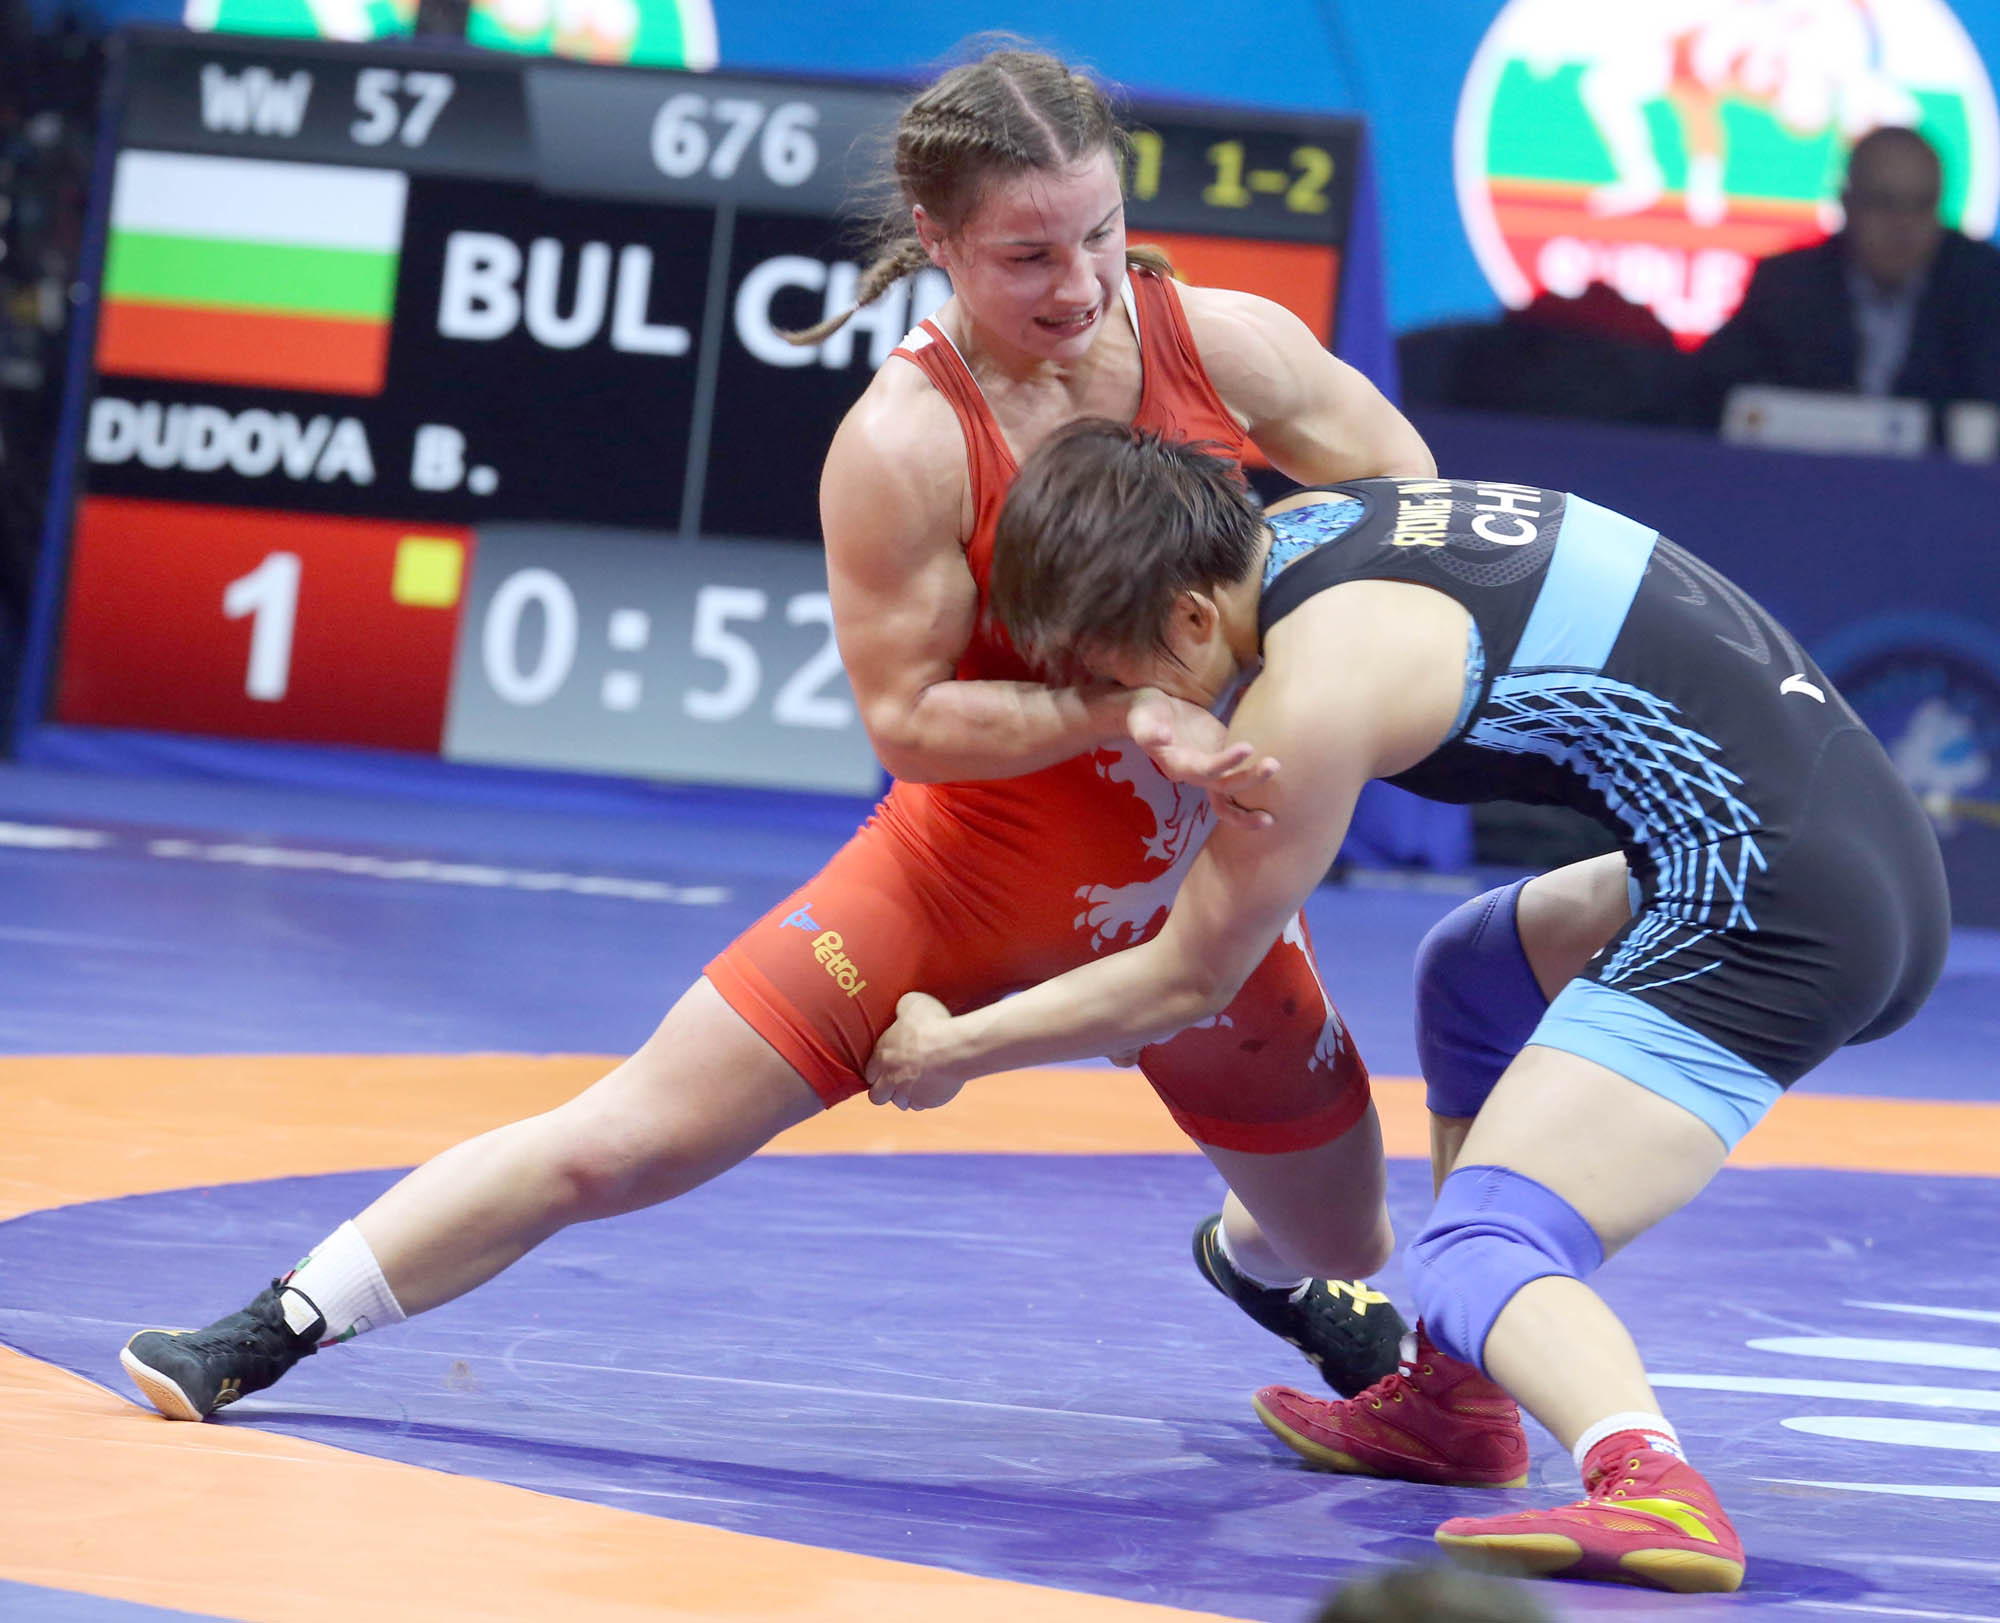 Биляна Дудова се бори за бронзов медал